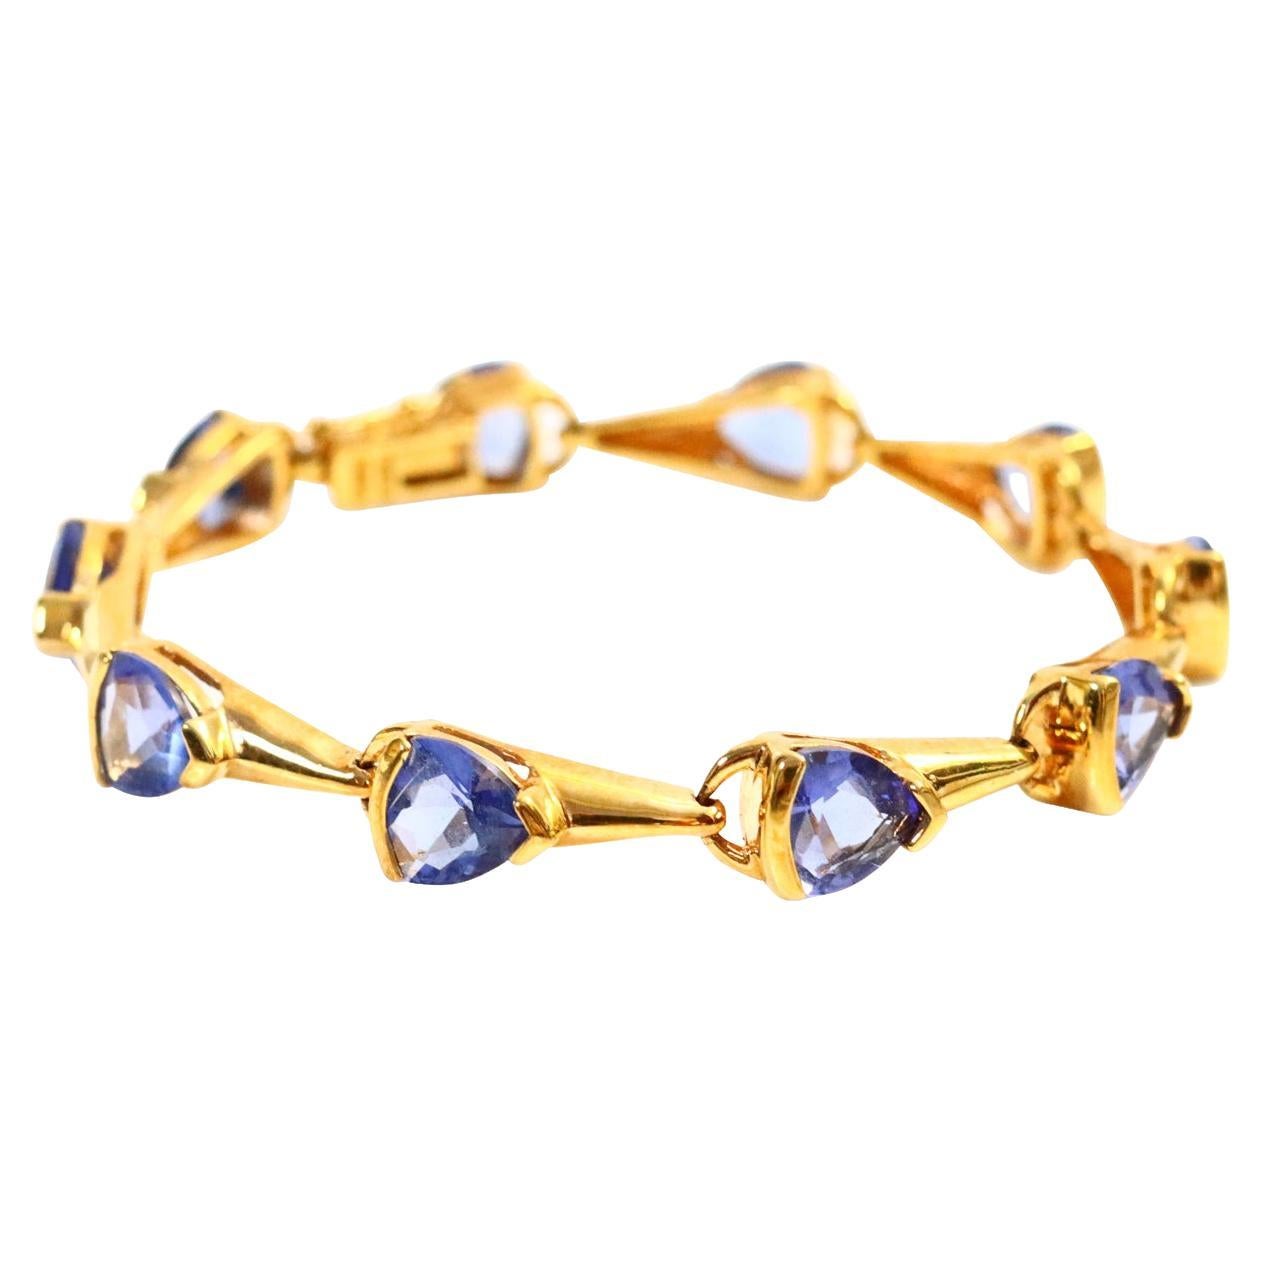 Vintage Sterling Gold Tone Link Bracelet with Blue Diamante Stones Circa 1990s